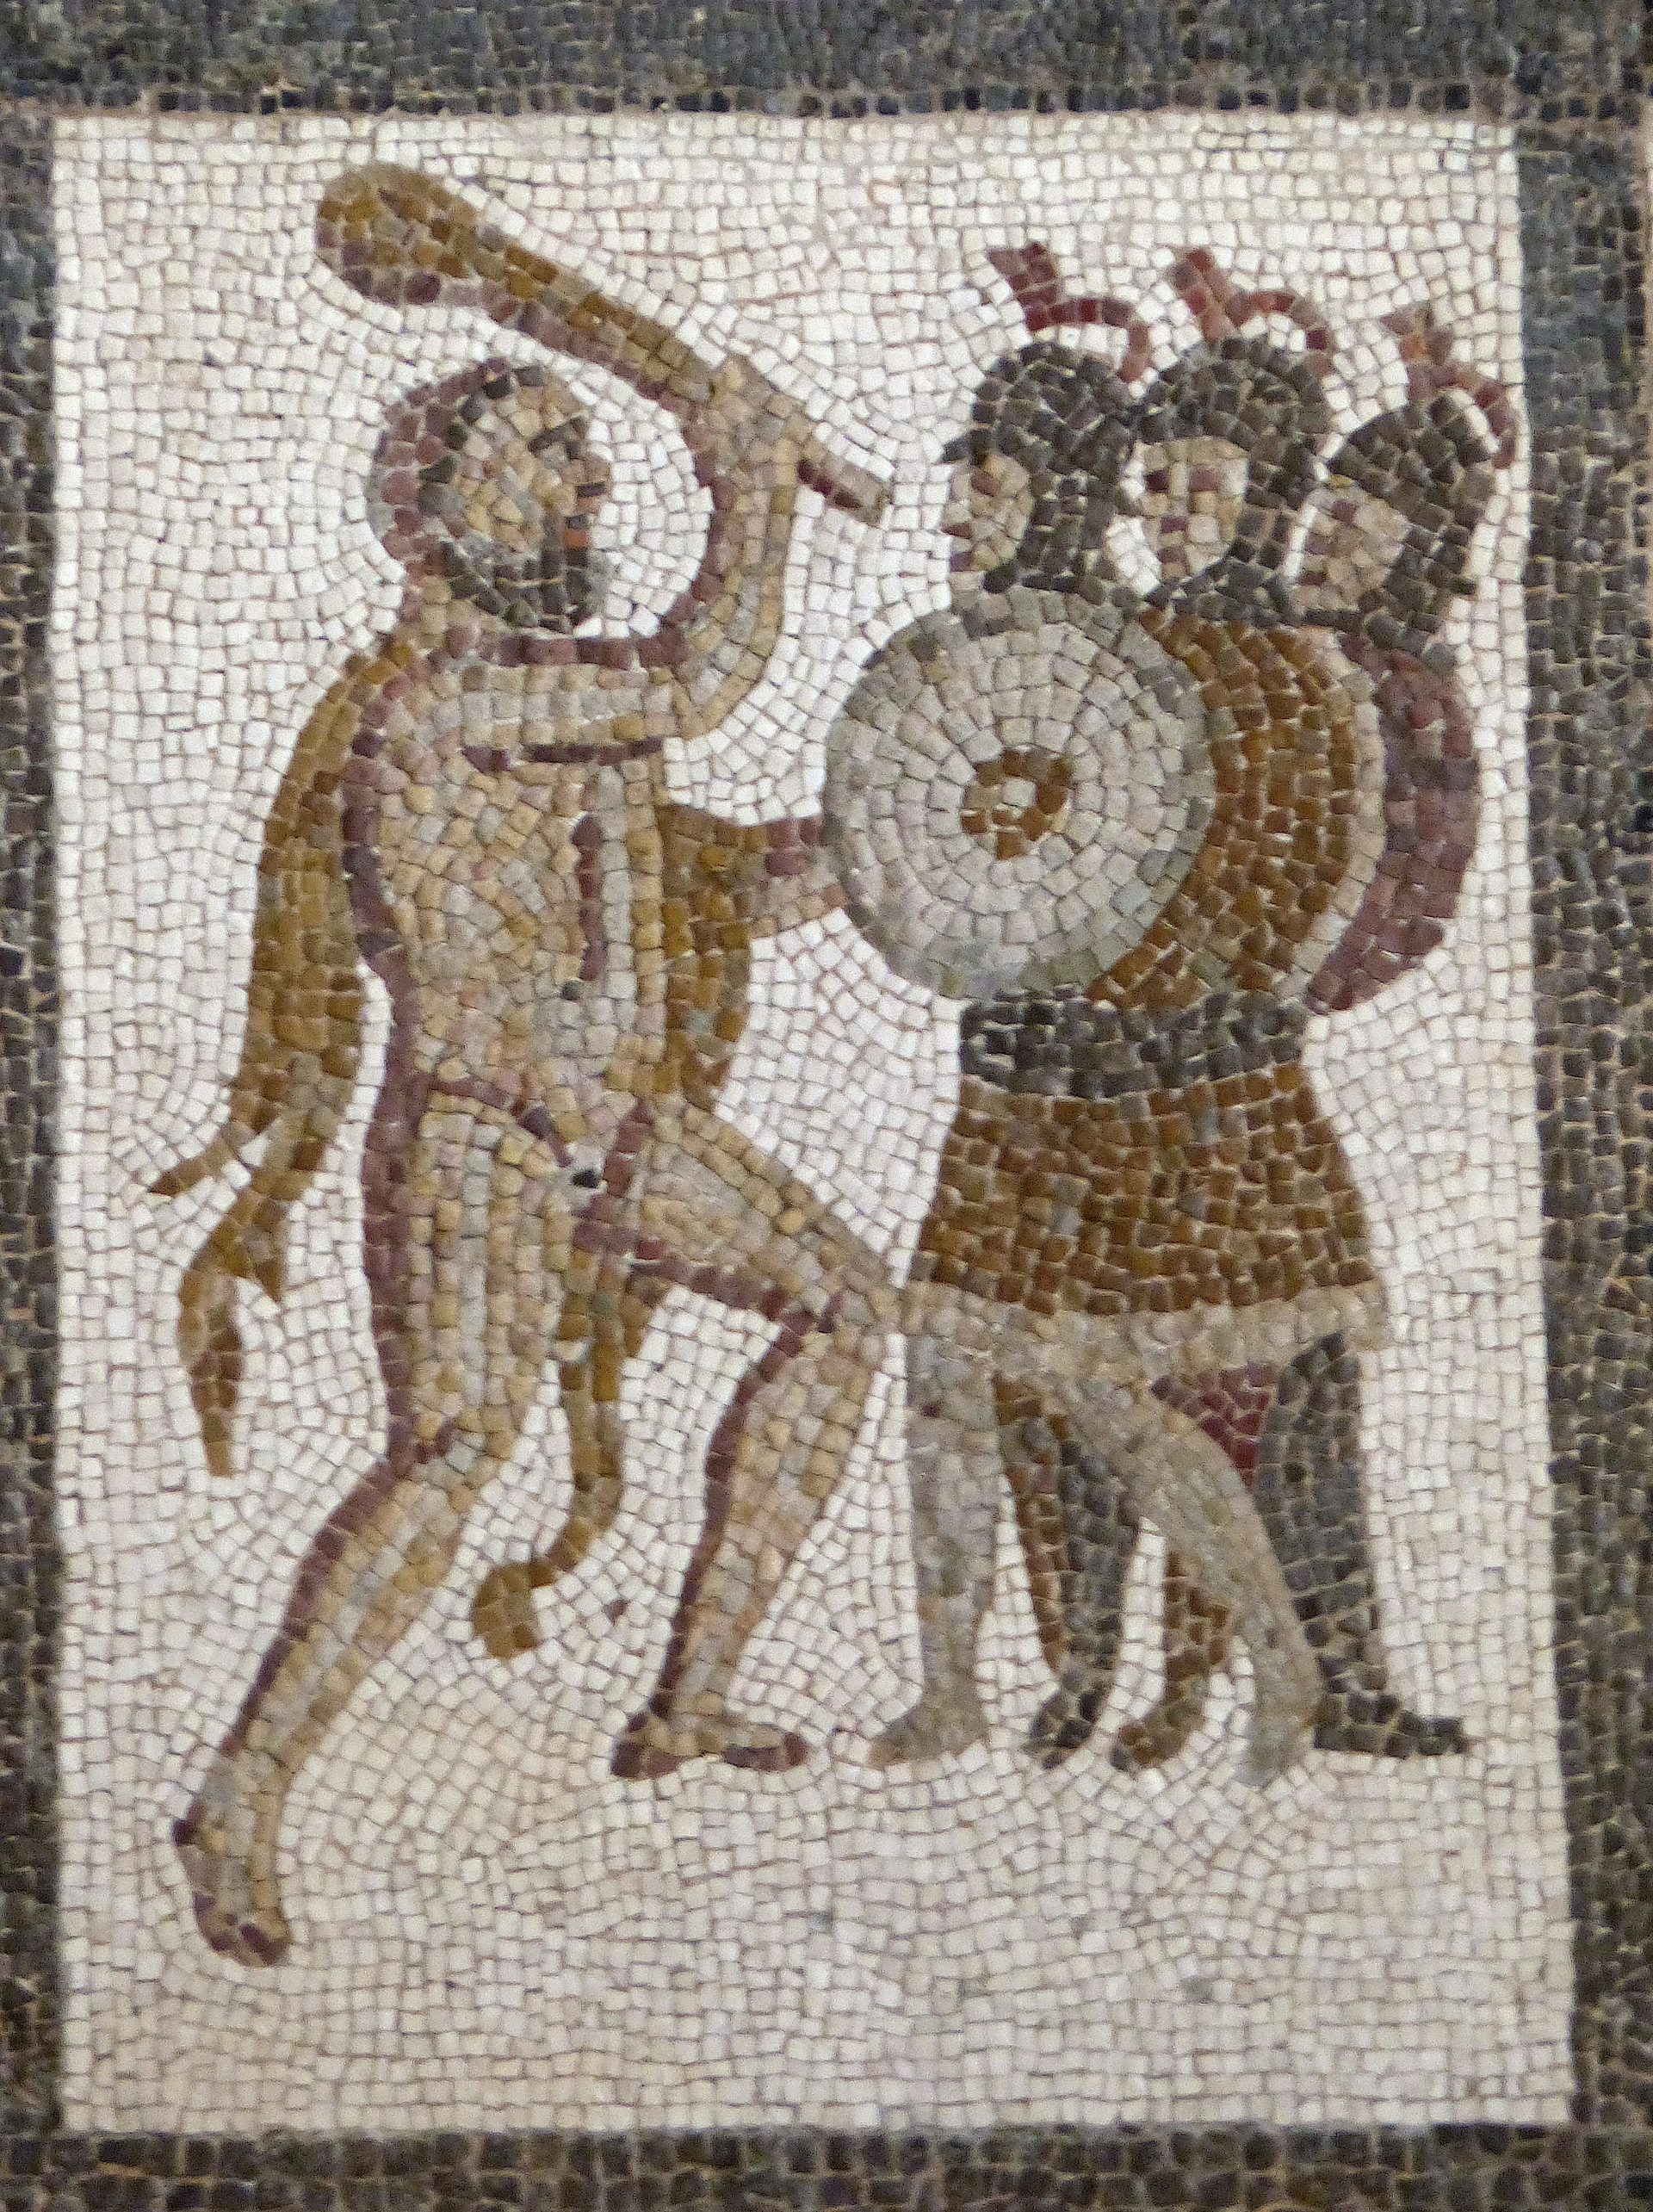 Heracles battling Geryon from twelve labours mosaic, Iliria